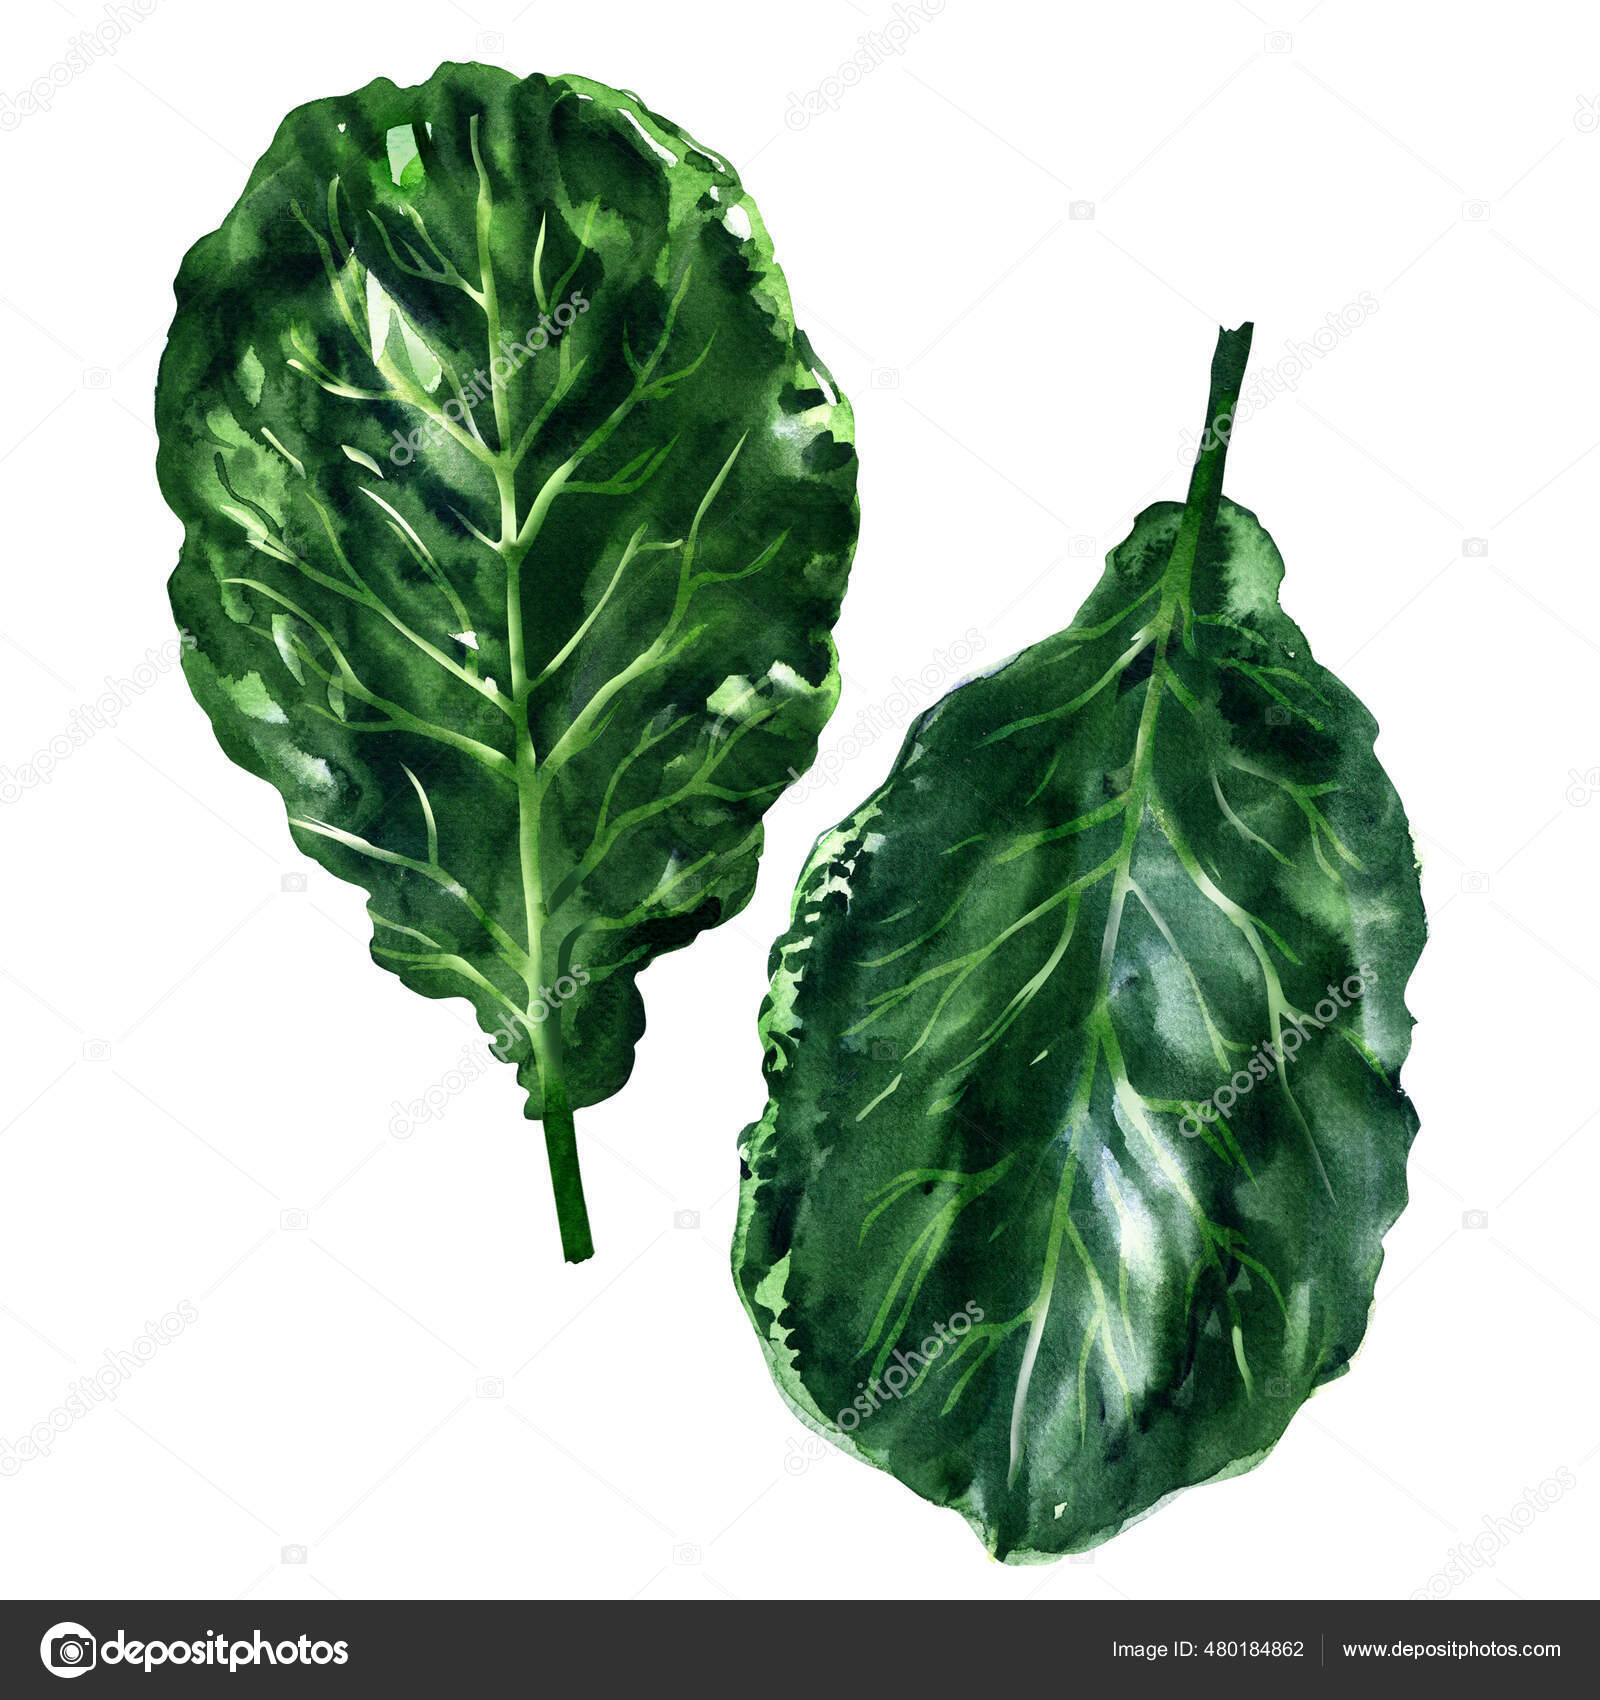 https://st2.depositphotos.com/1015581/48018/i/1600/depositphotos_480184862-stock-photo-fresh-collard-greens-leaves-organic.jpg